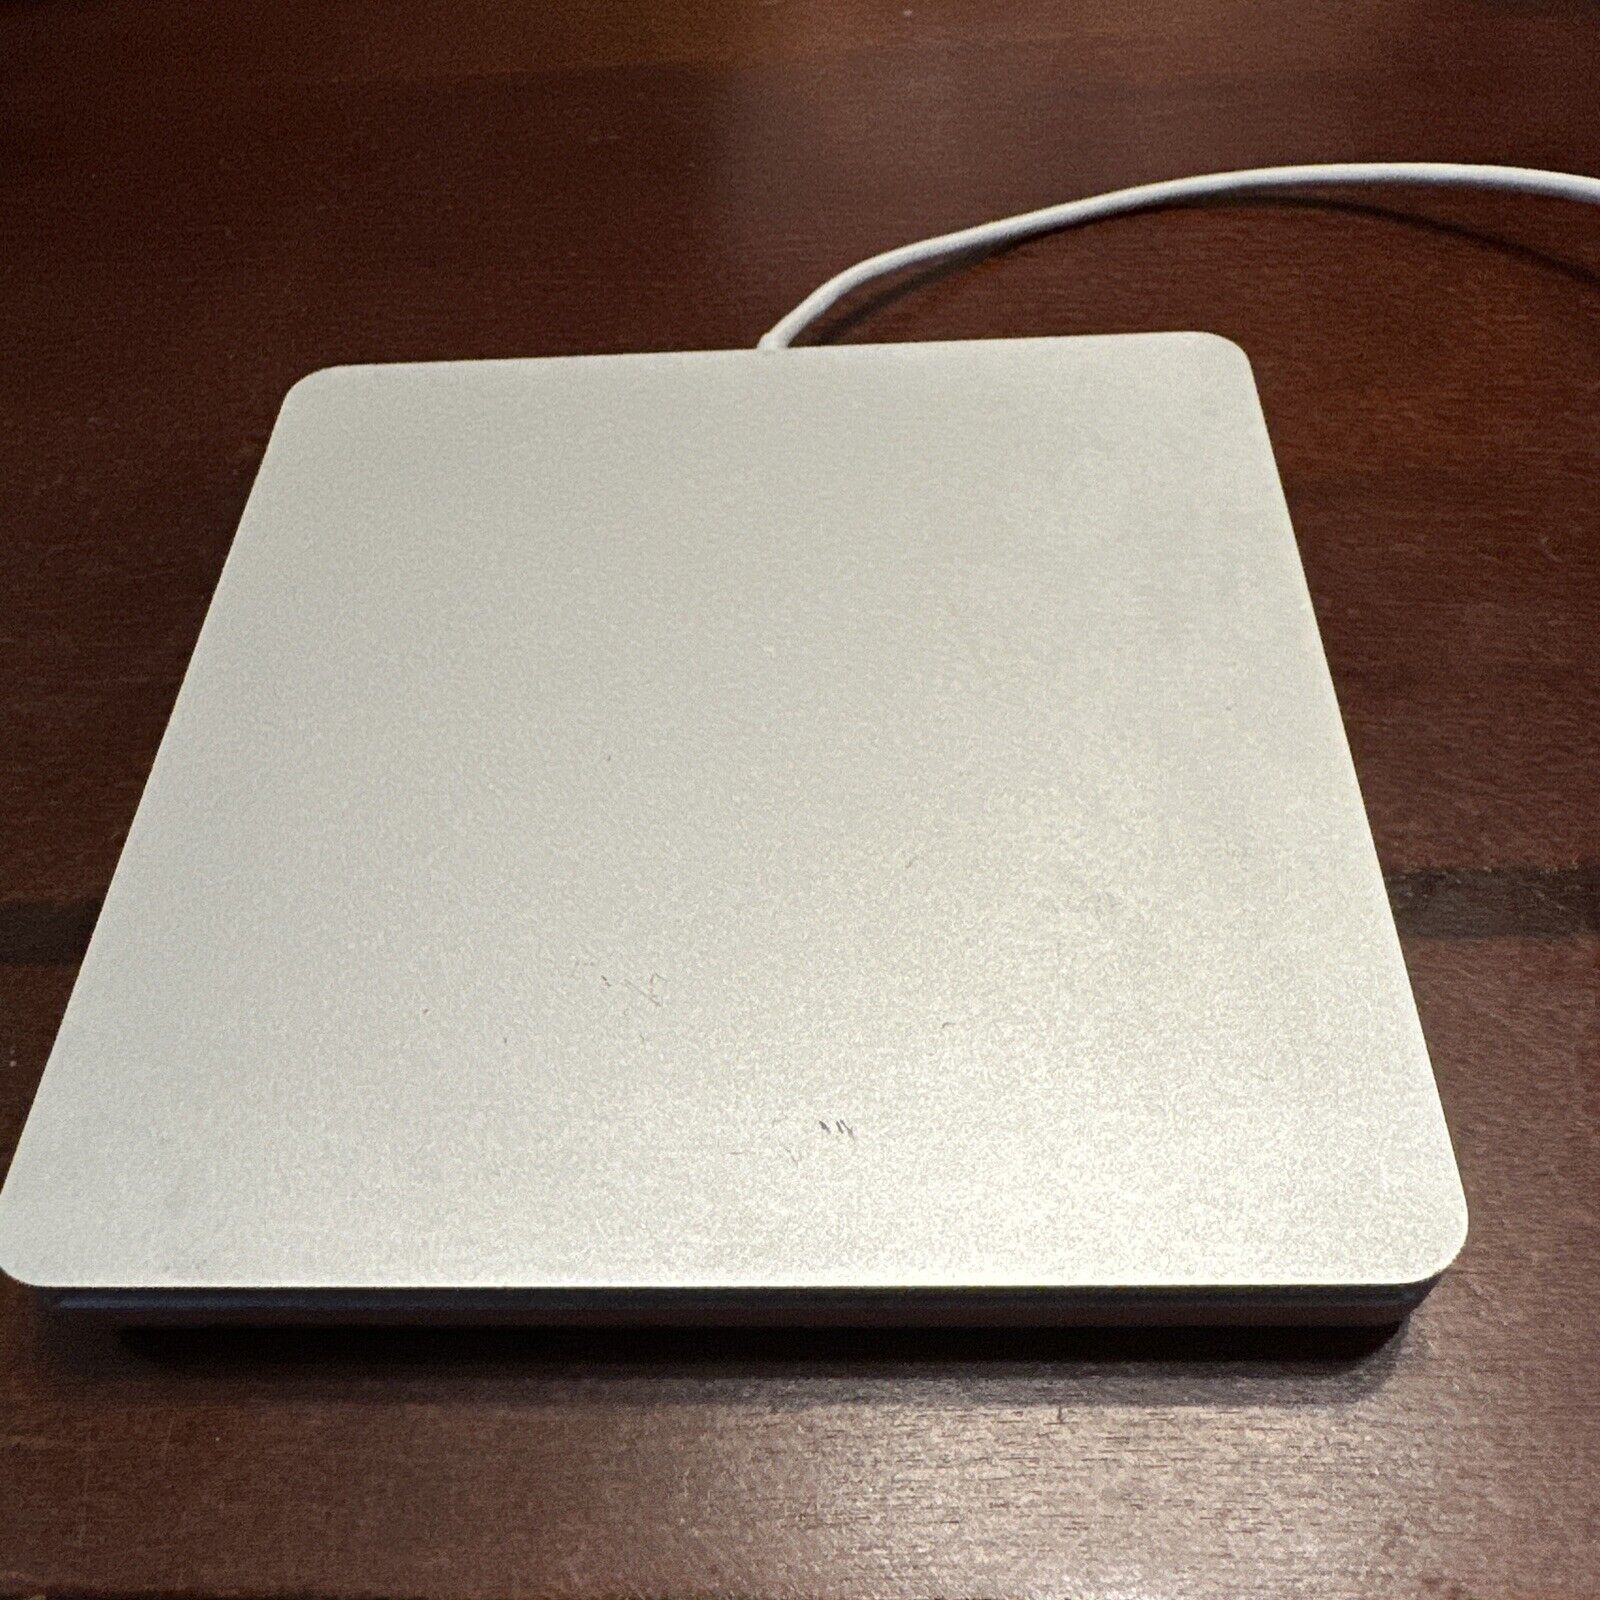 MacBook Air SuperDrive Tested, Works